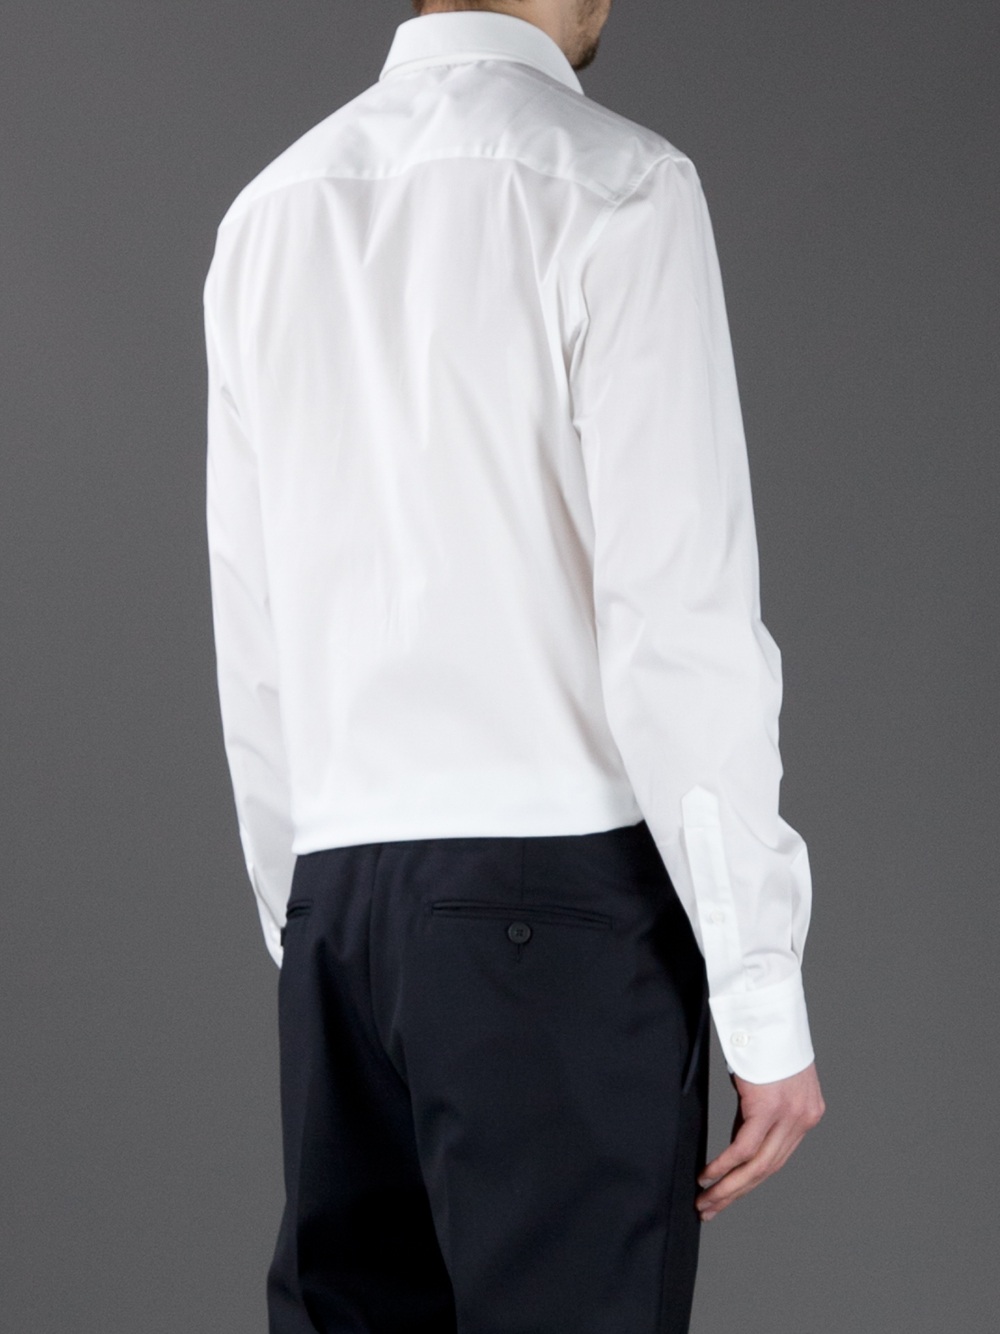 Z Zegna Pointed Collar Dress Shirt in White for Men - Lyst